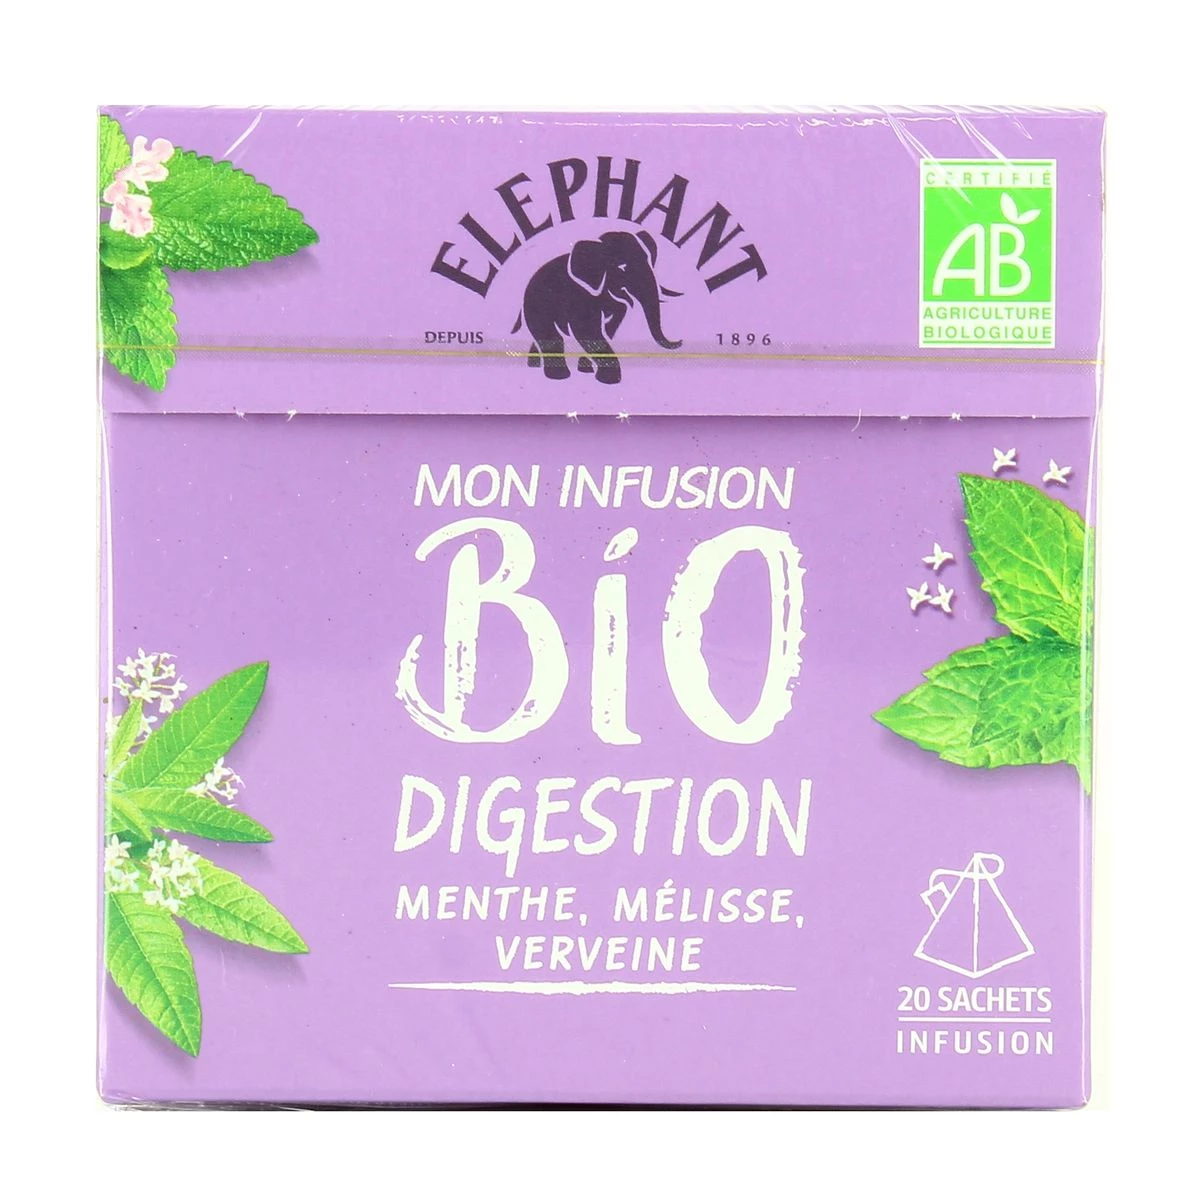 Mon infusion bio digestion x20 26g - ELEPHANT